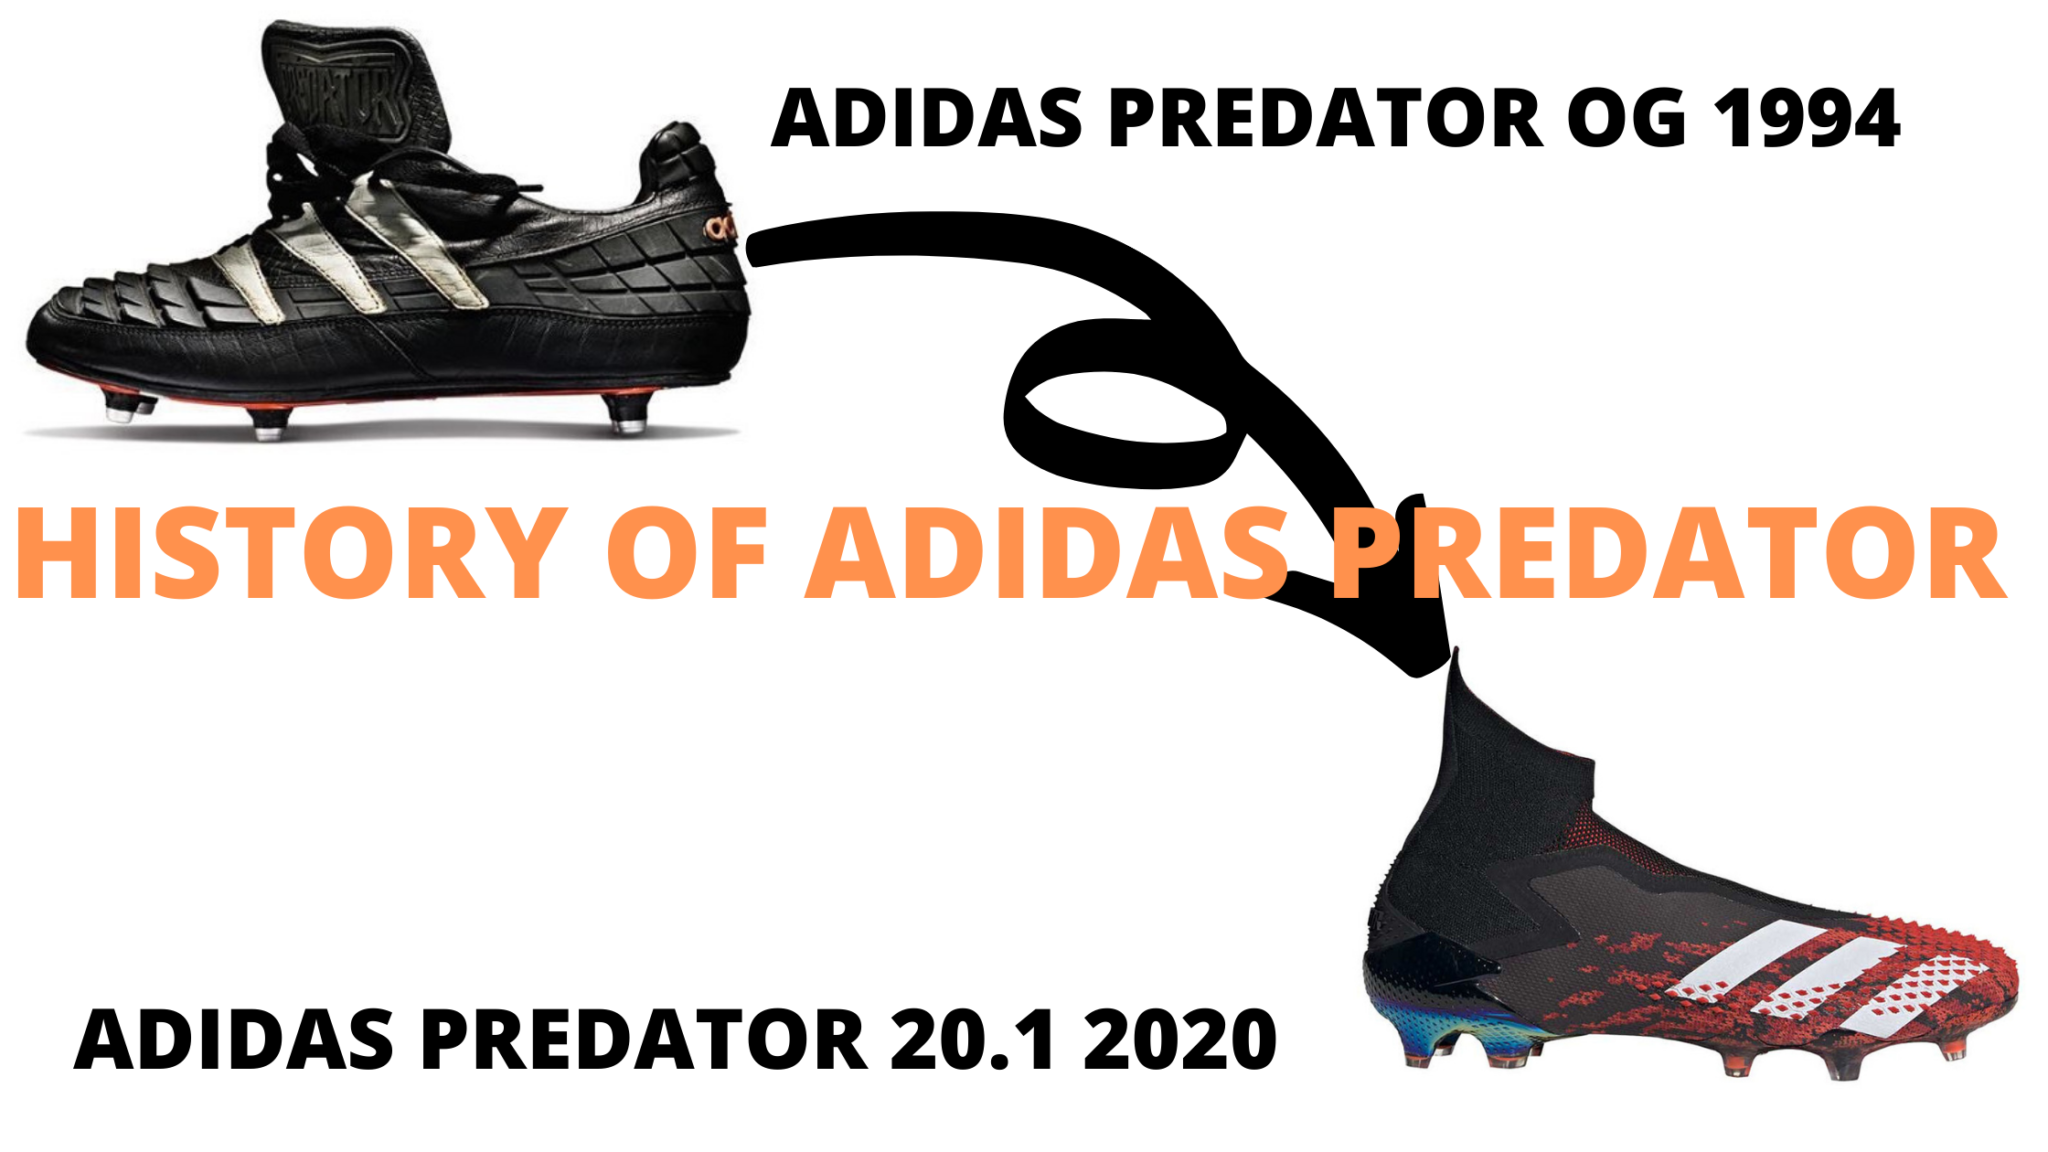 History of the adidas predator